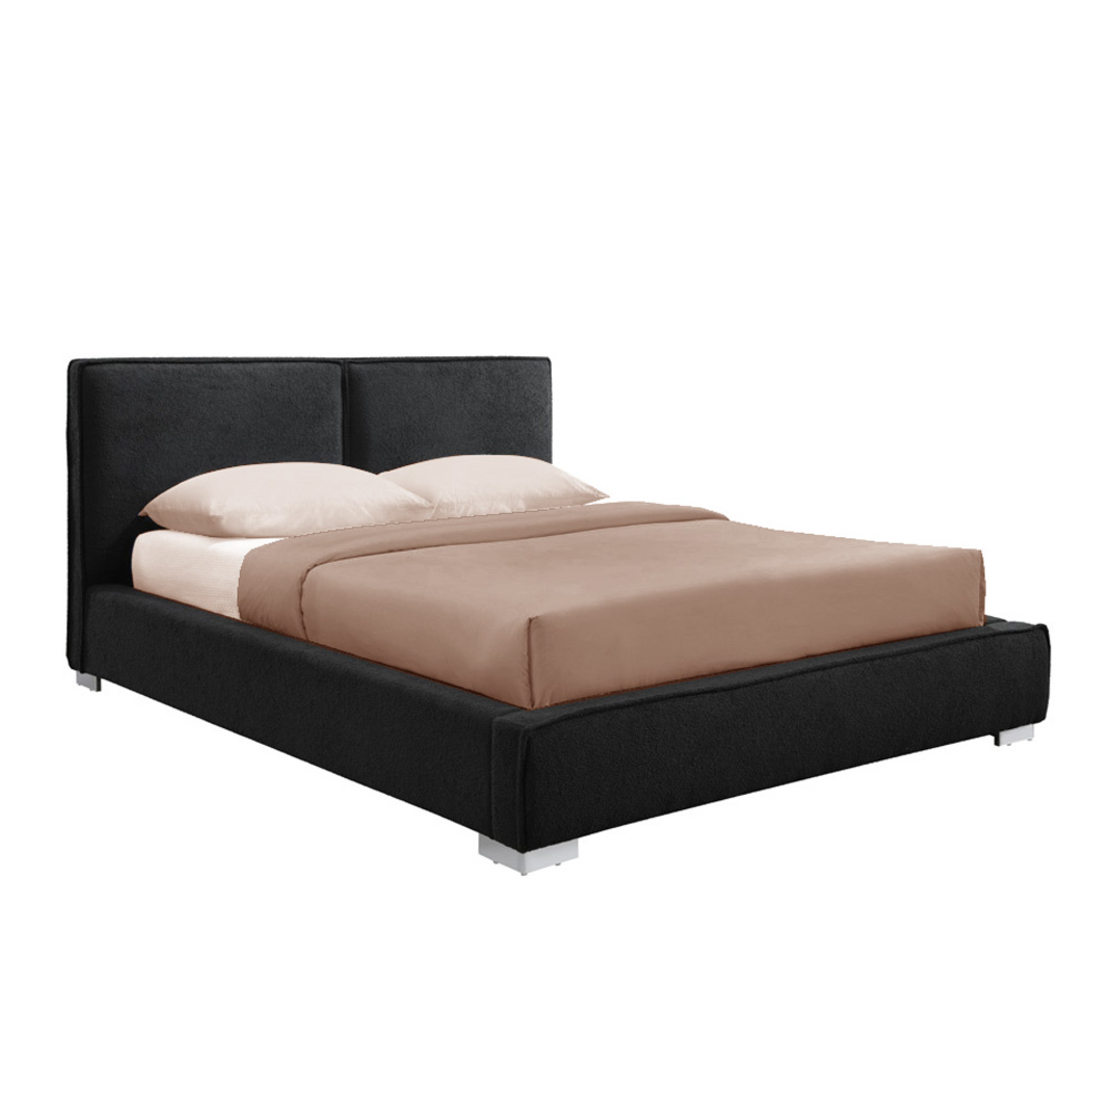 URBAN BED (FOR MATTRESS 160x200cm) FABRIC BLACK E1